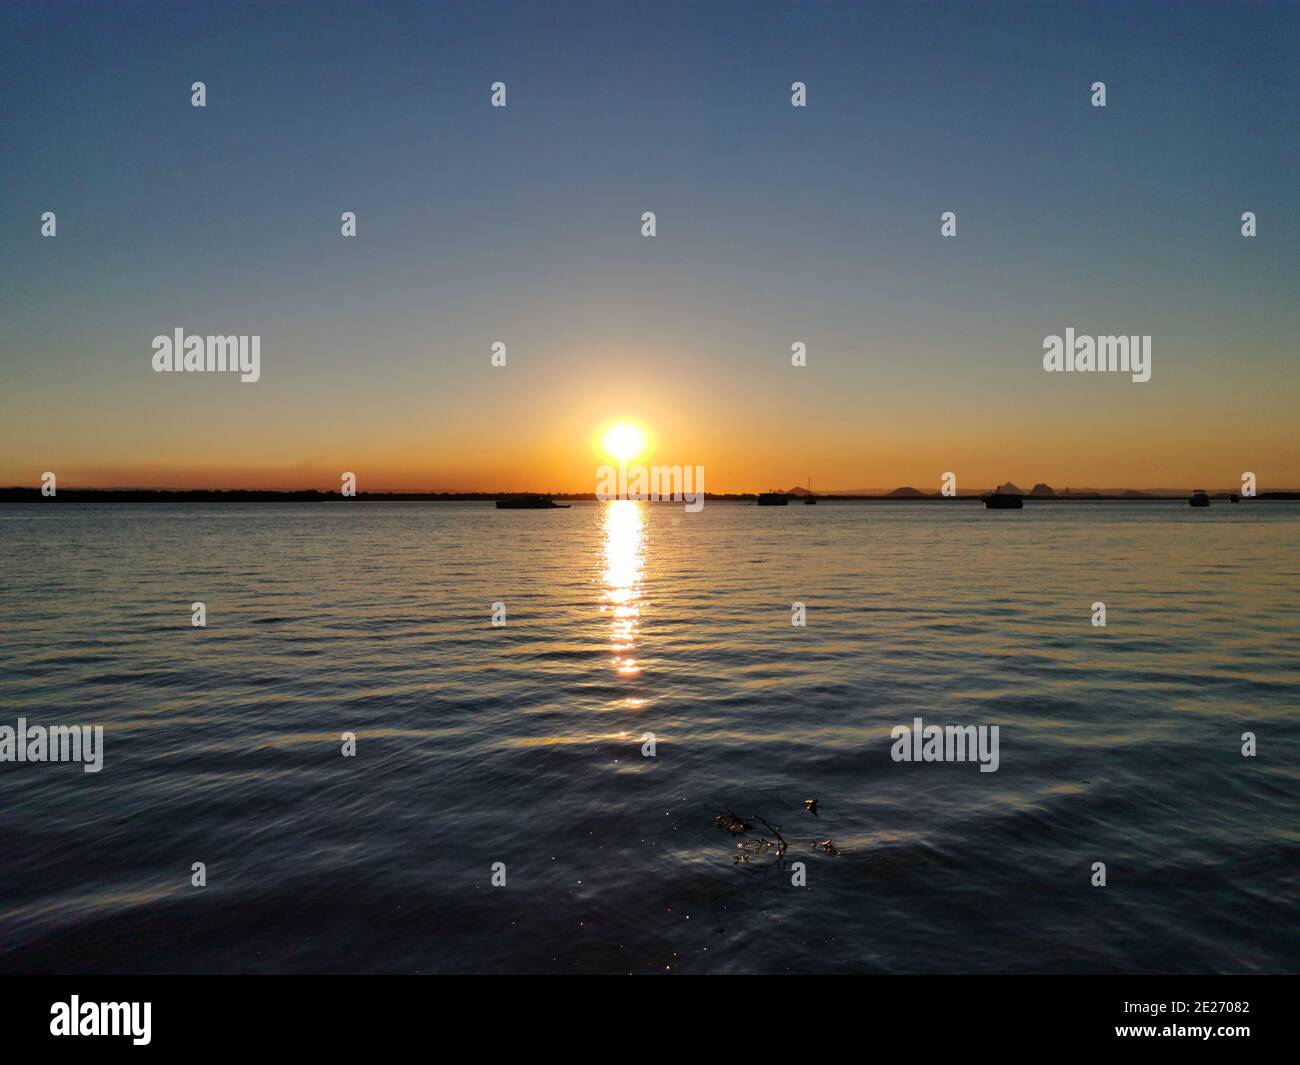 Stunning seascape at sundown reflecting on the water surface Stock Photo